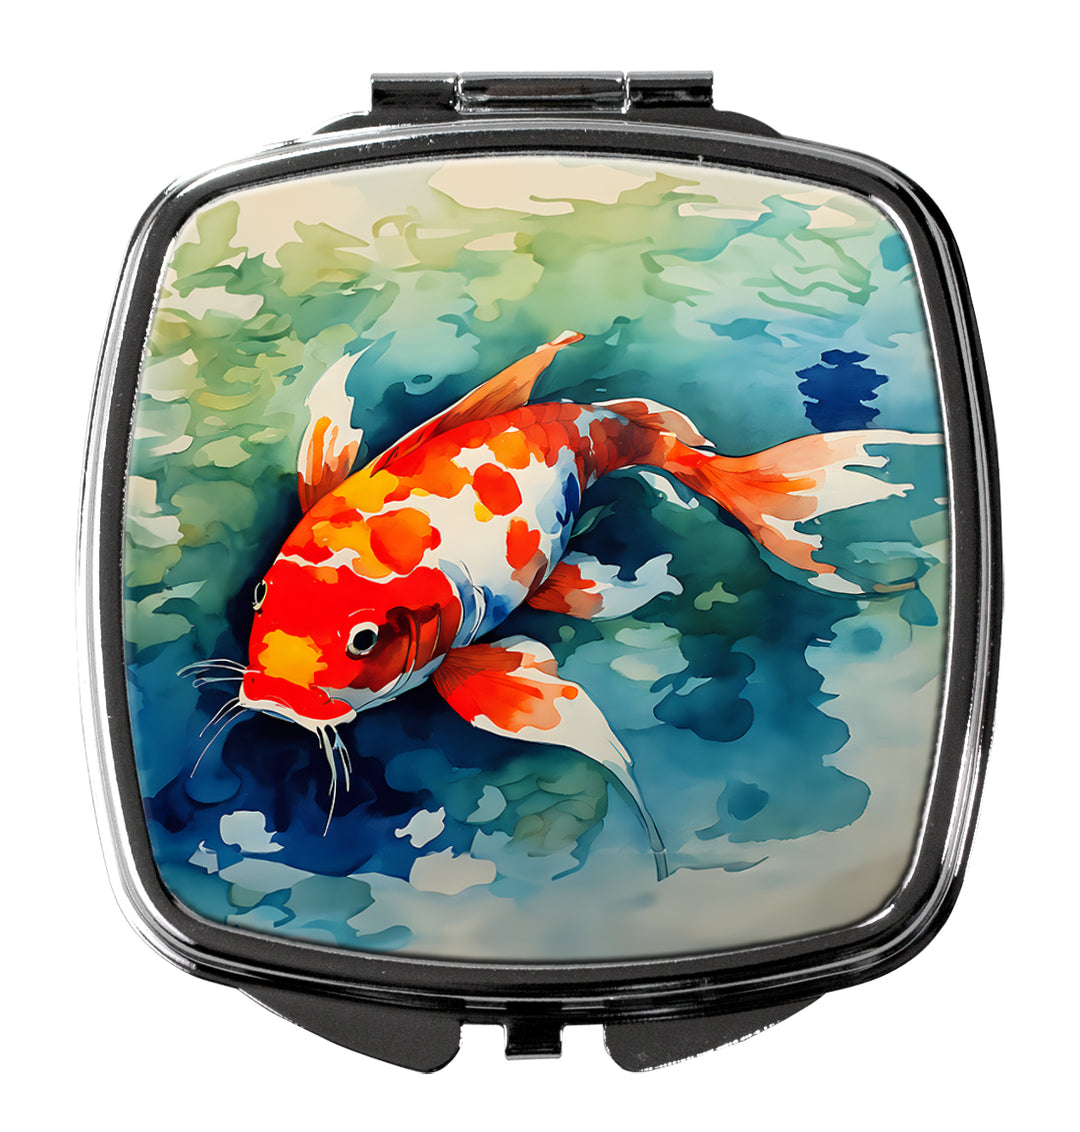 Koi Fish Compact Mirror Image 1